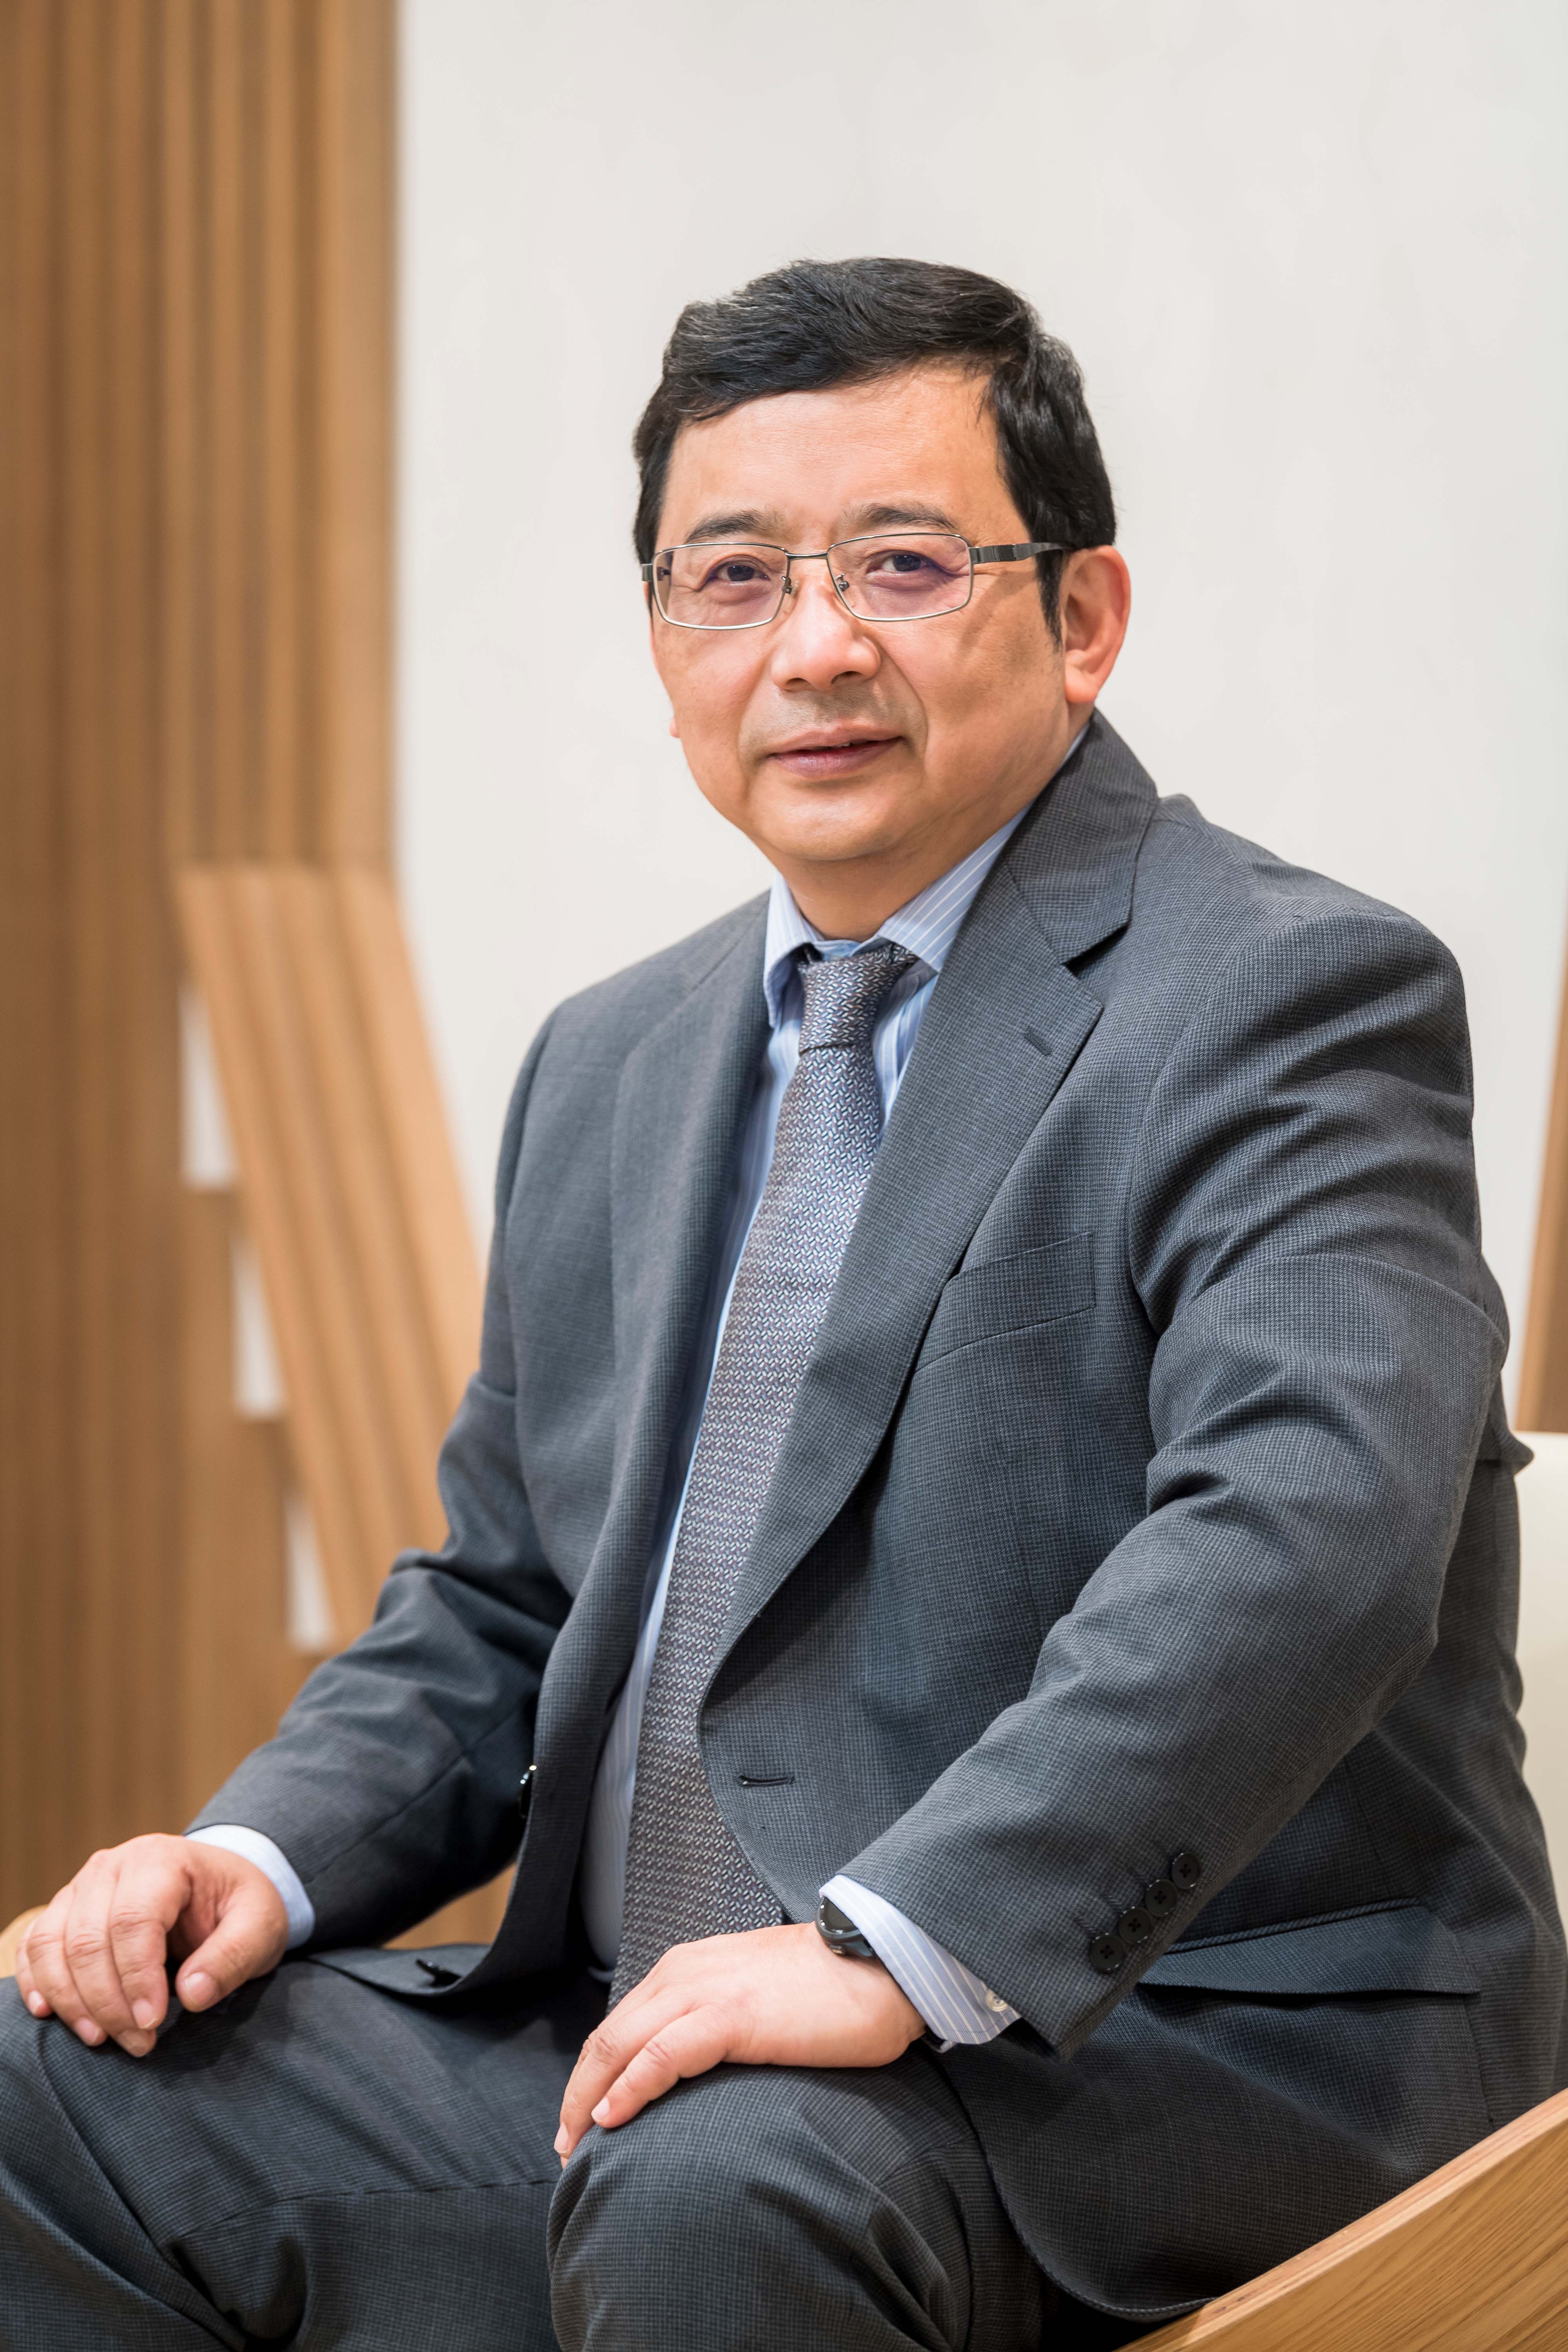 Prof Wenjun Zhang